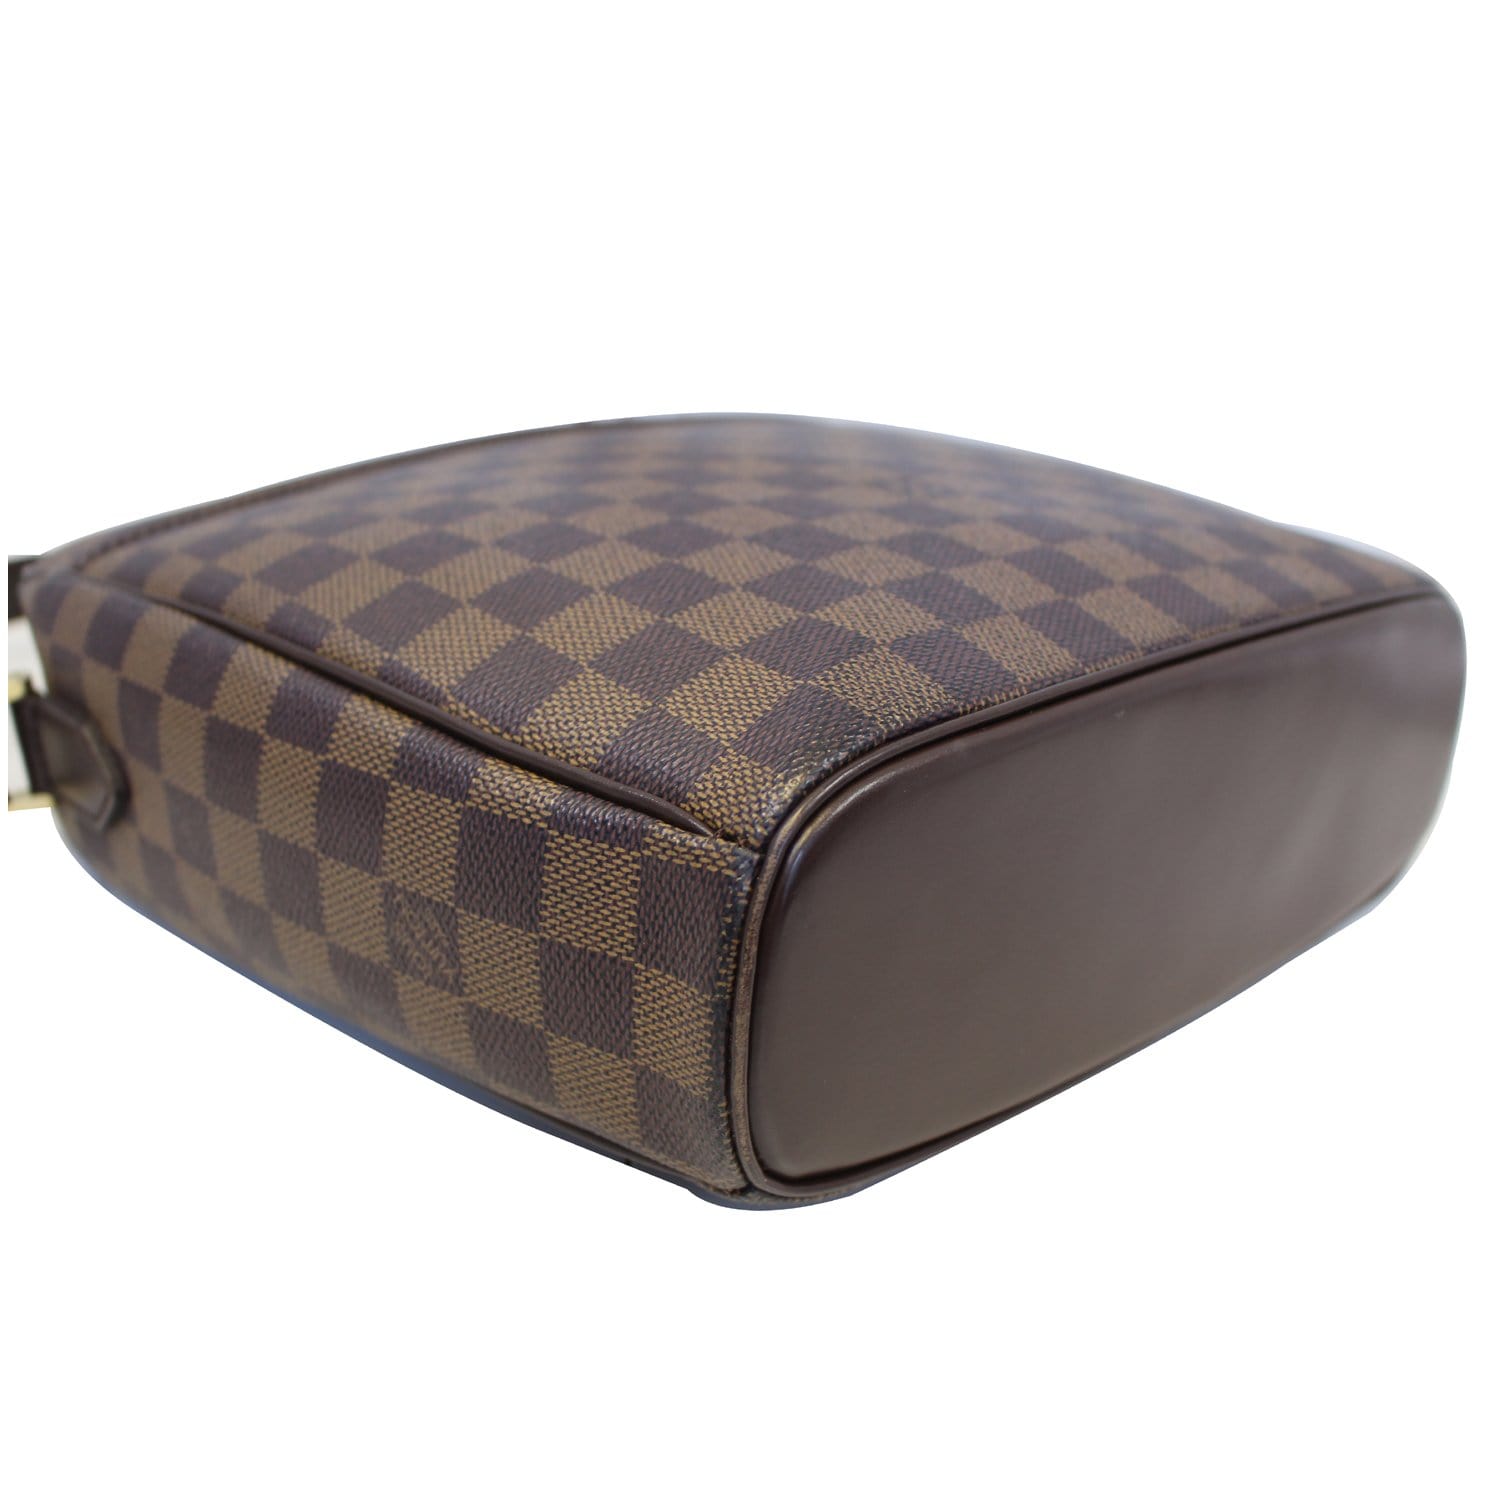 Louis Vuitton - Authenticated Ipanema Handbag - Leather Beige Plain for Women, Very Good Condition